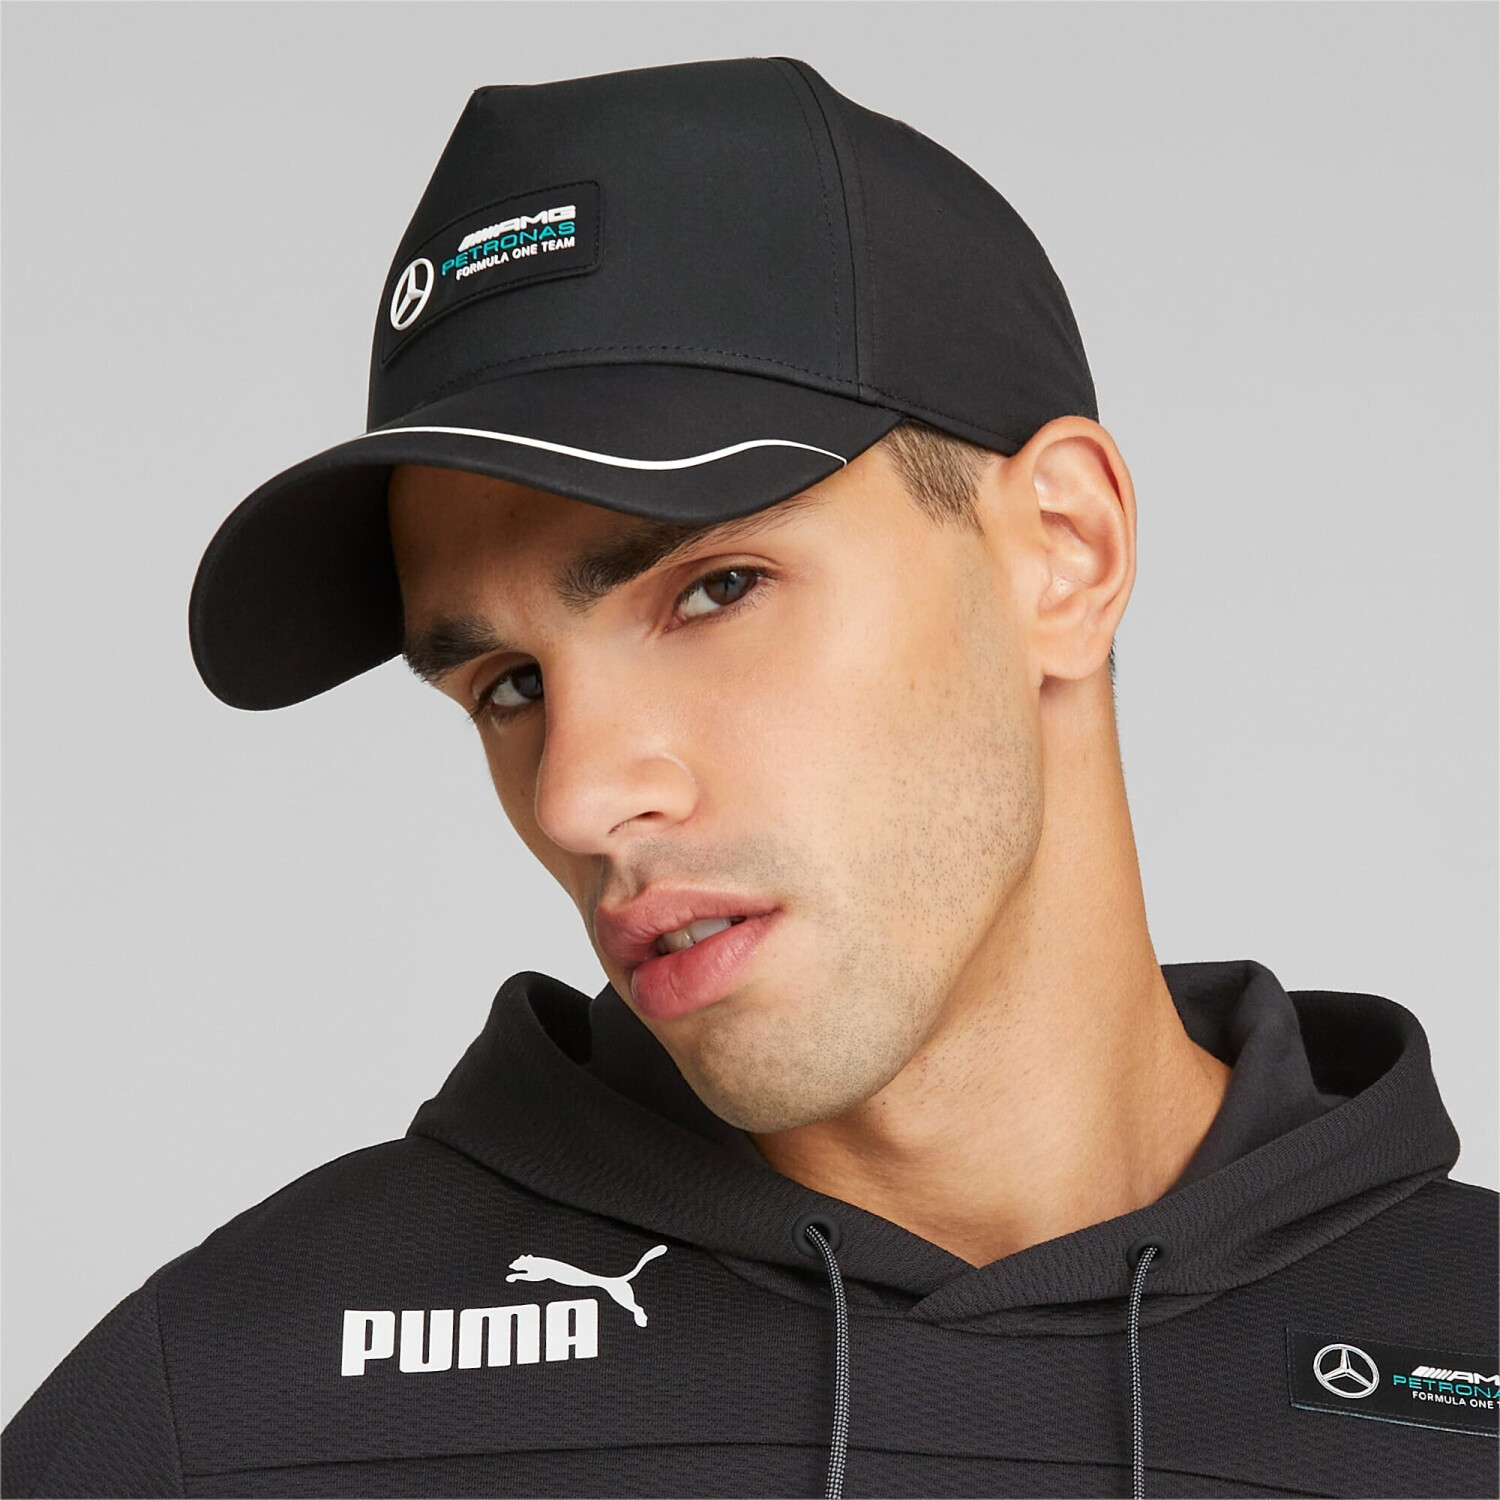 Puma Mercedes-Amg Petronas Preisvergleich bei | ab Cap 19,99 black (24485) Motorsport €